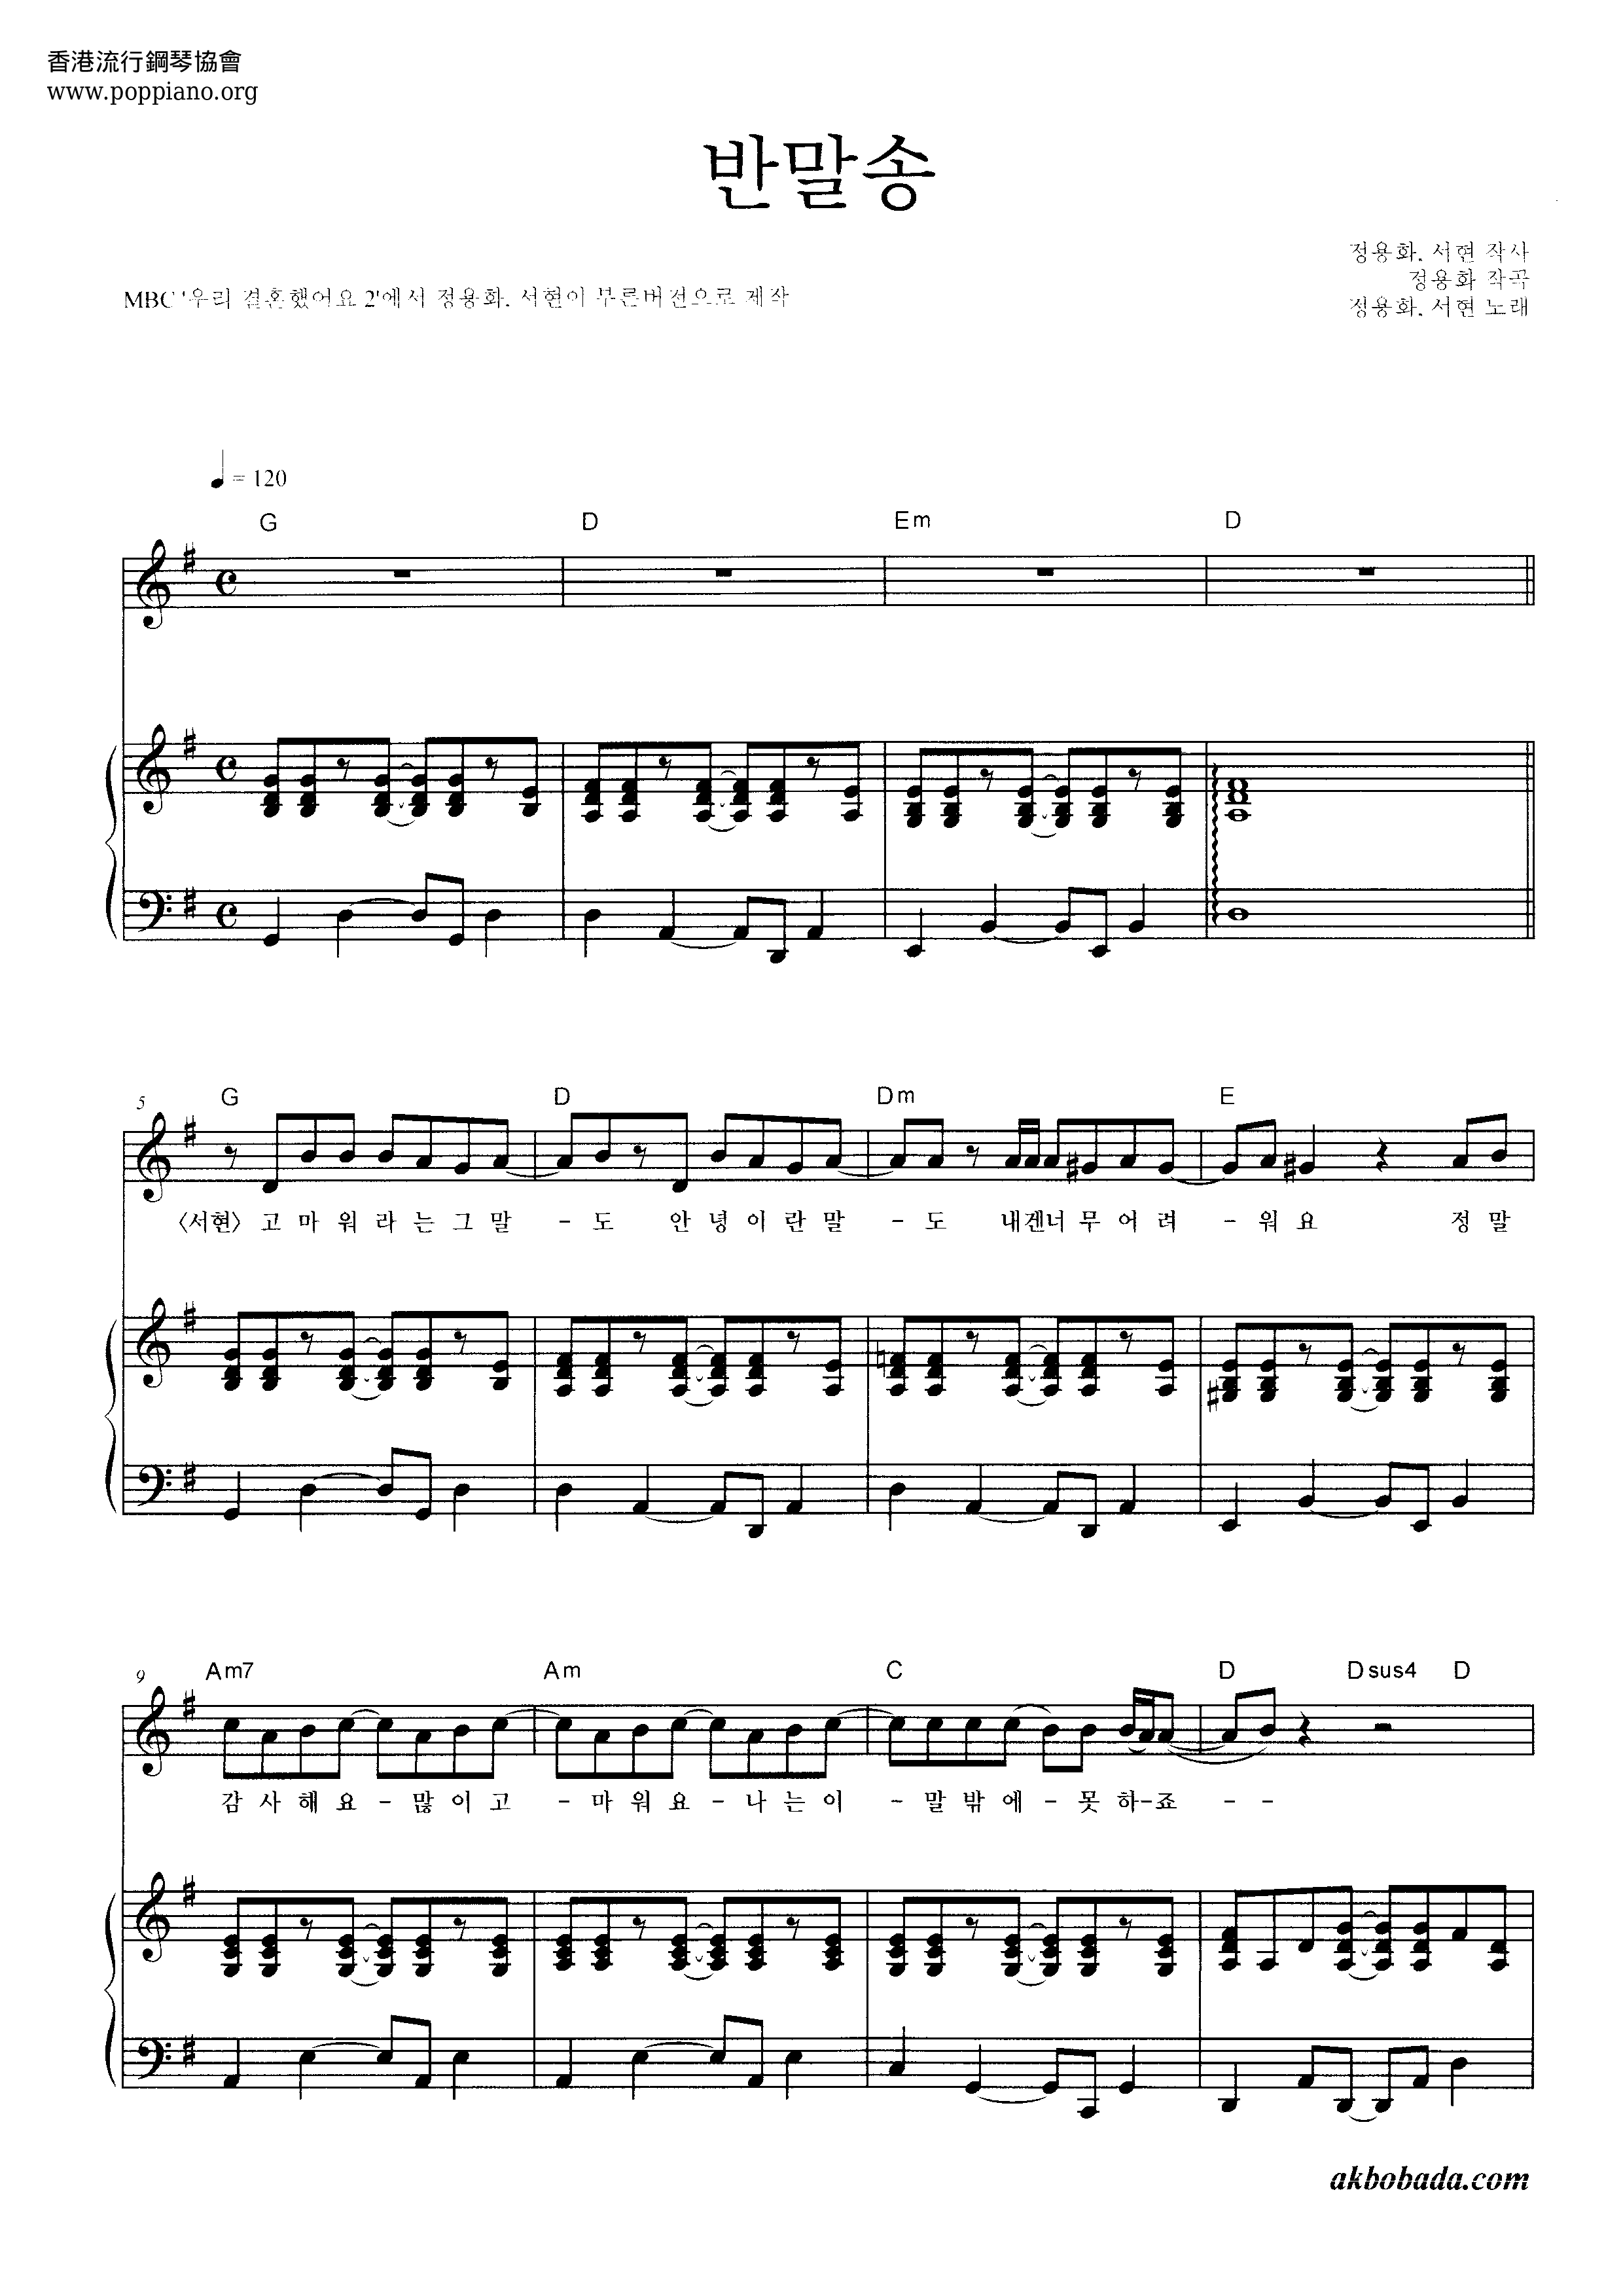 Banmal Song Score